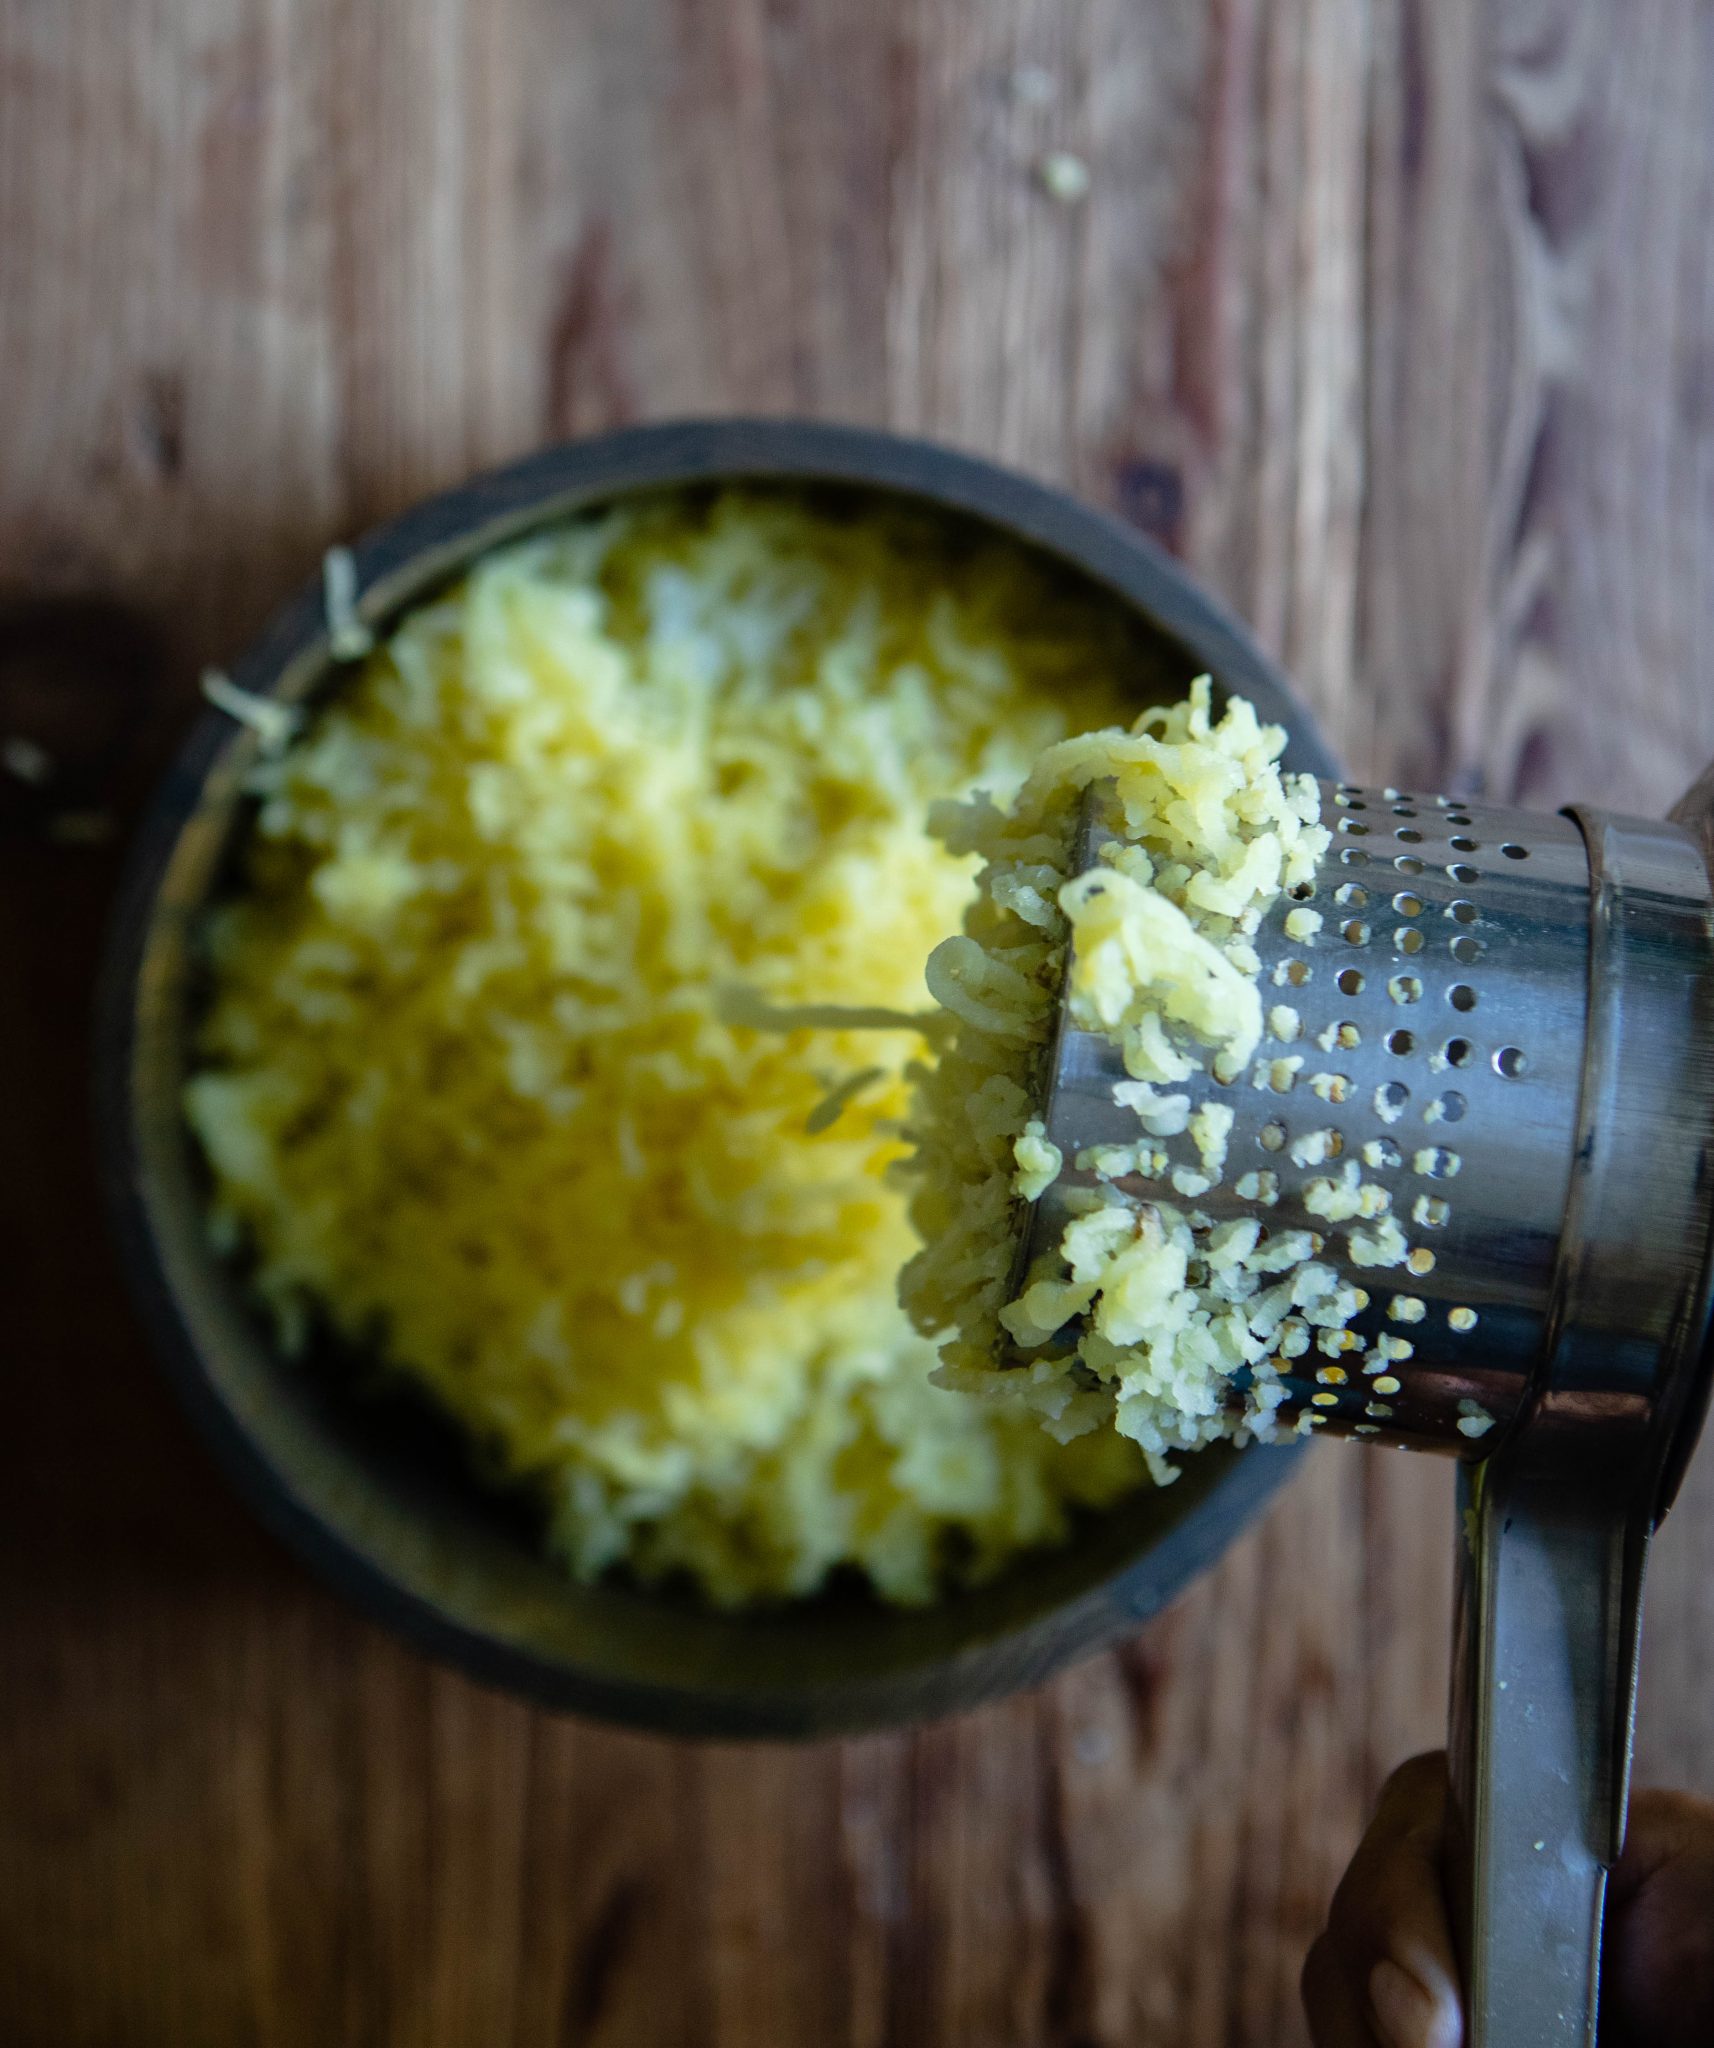 potato ricer ricing yellow potatoes into a bowl